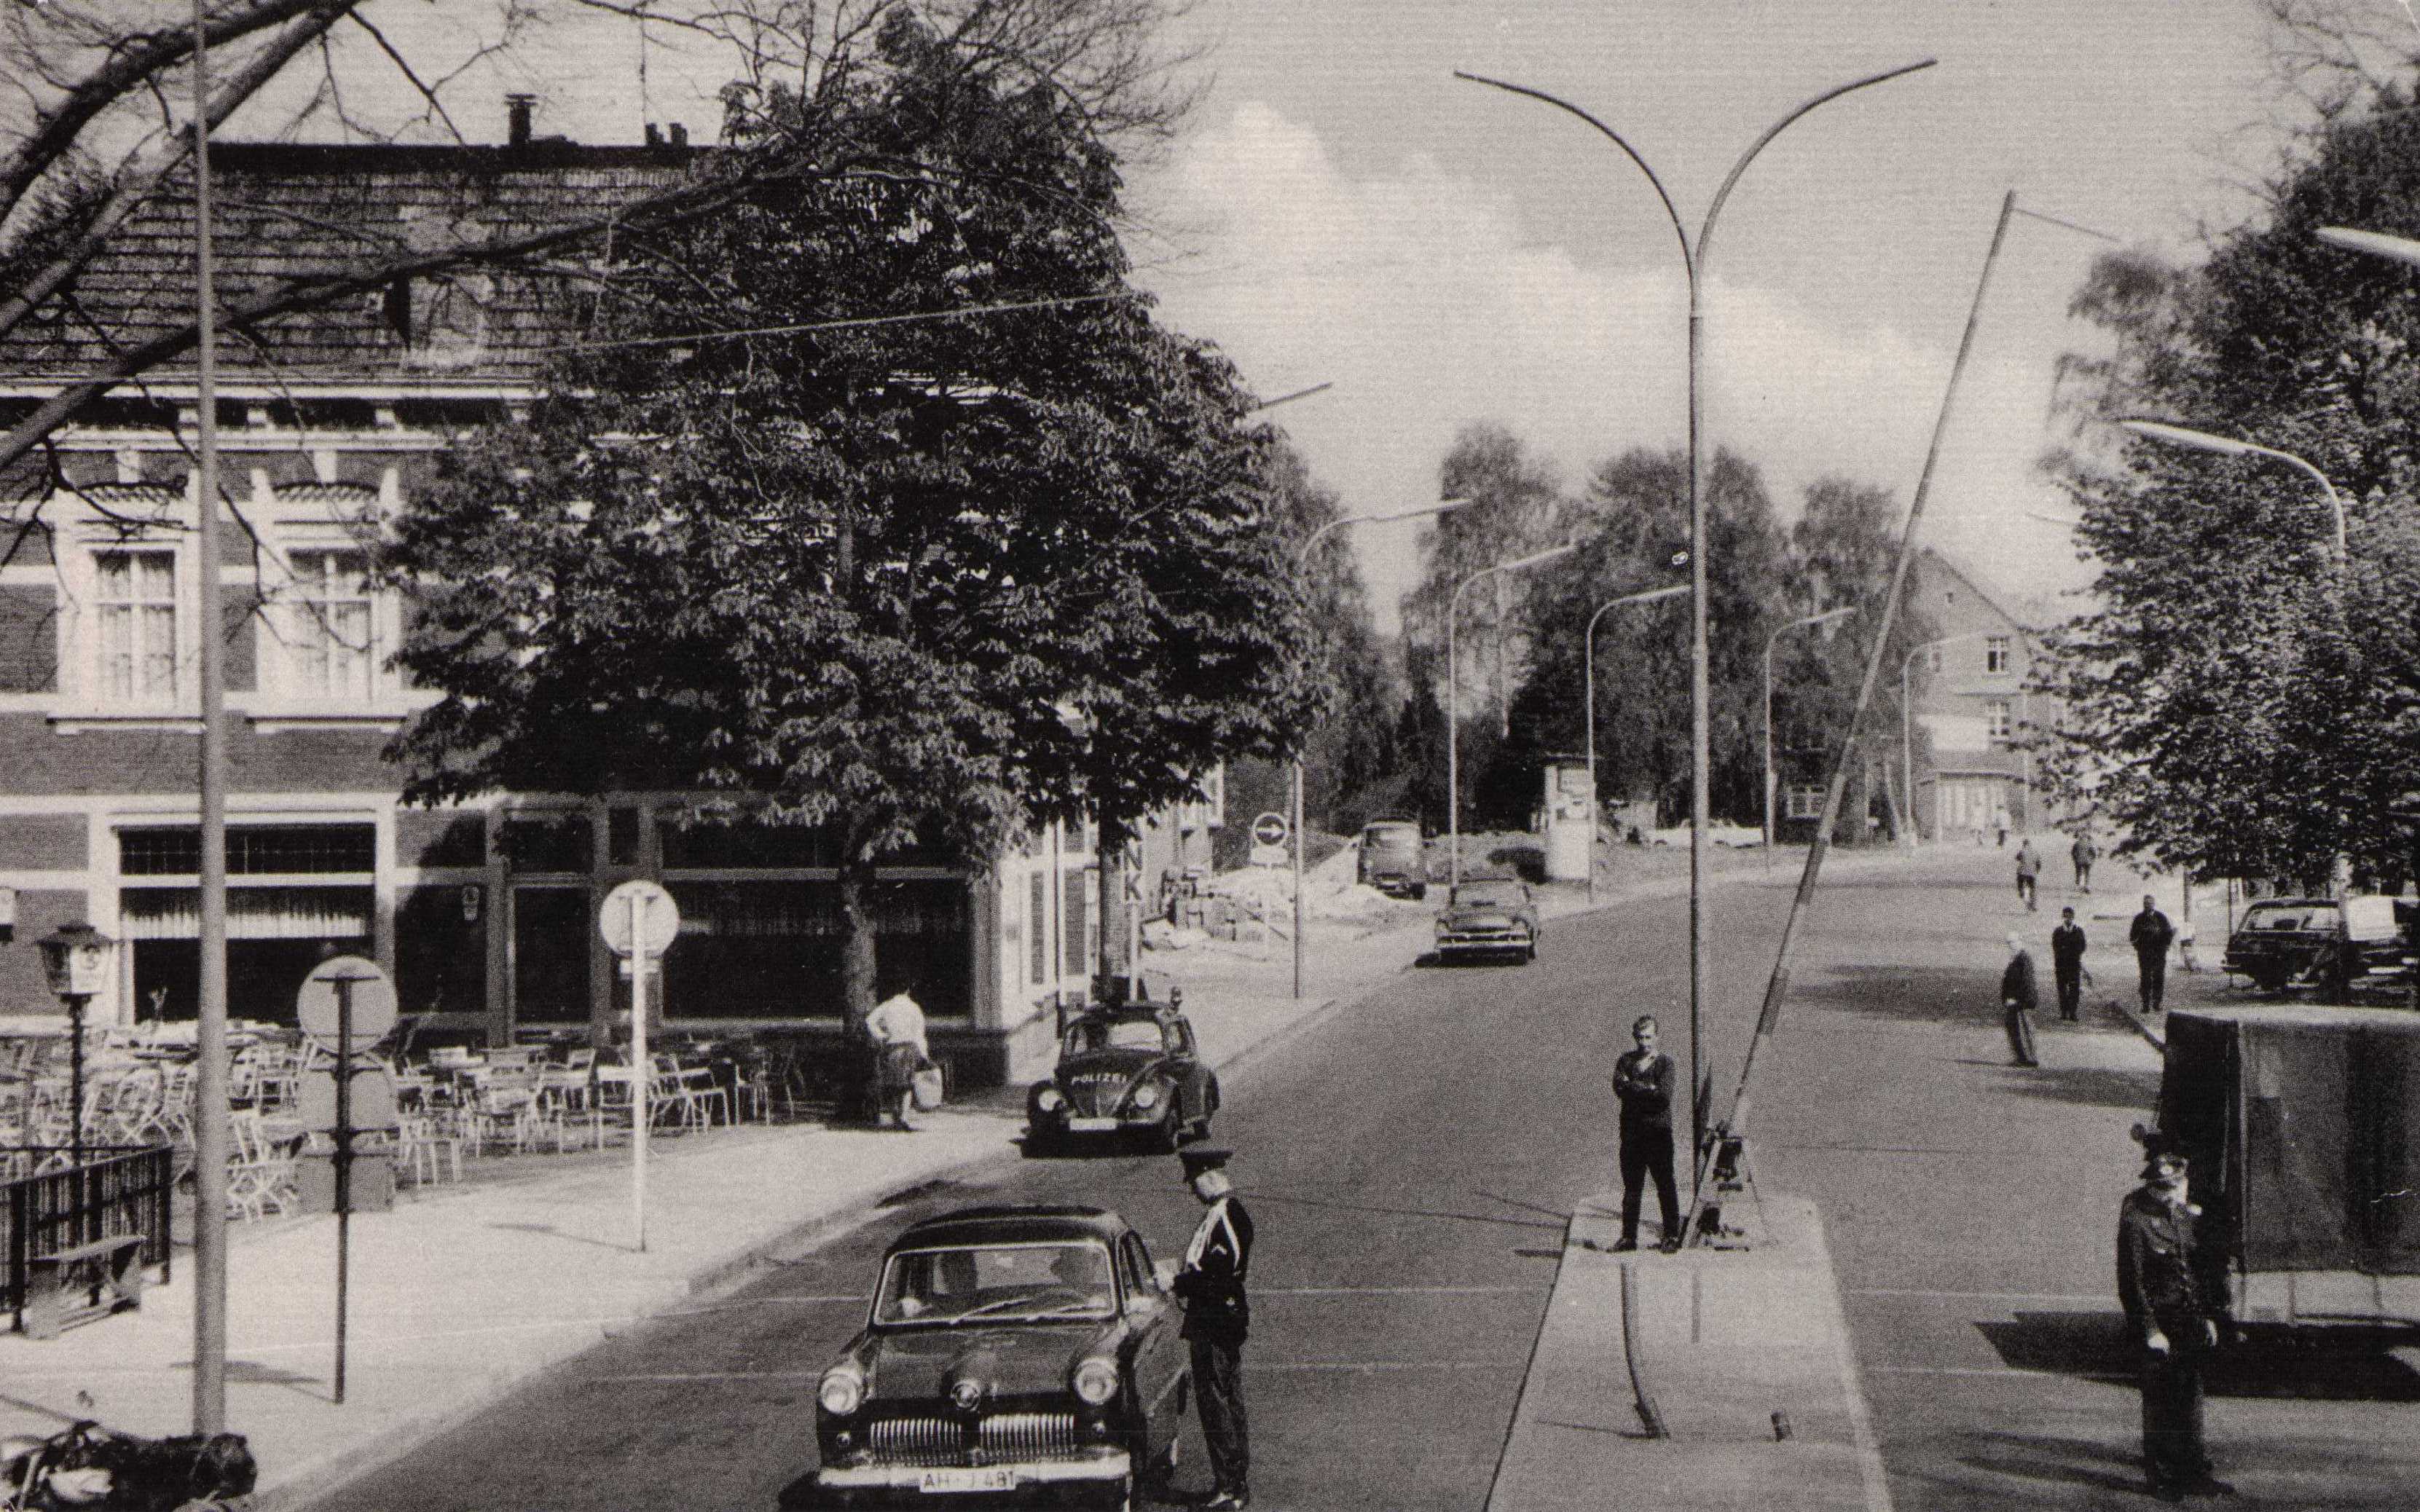 Glanerbrug-grens-1960-56ac94d1.jpg